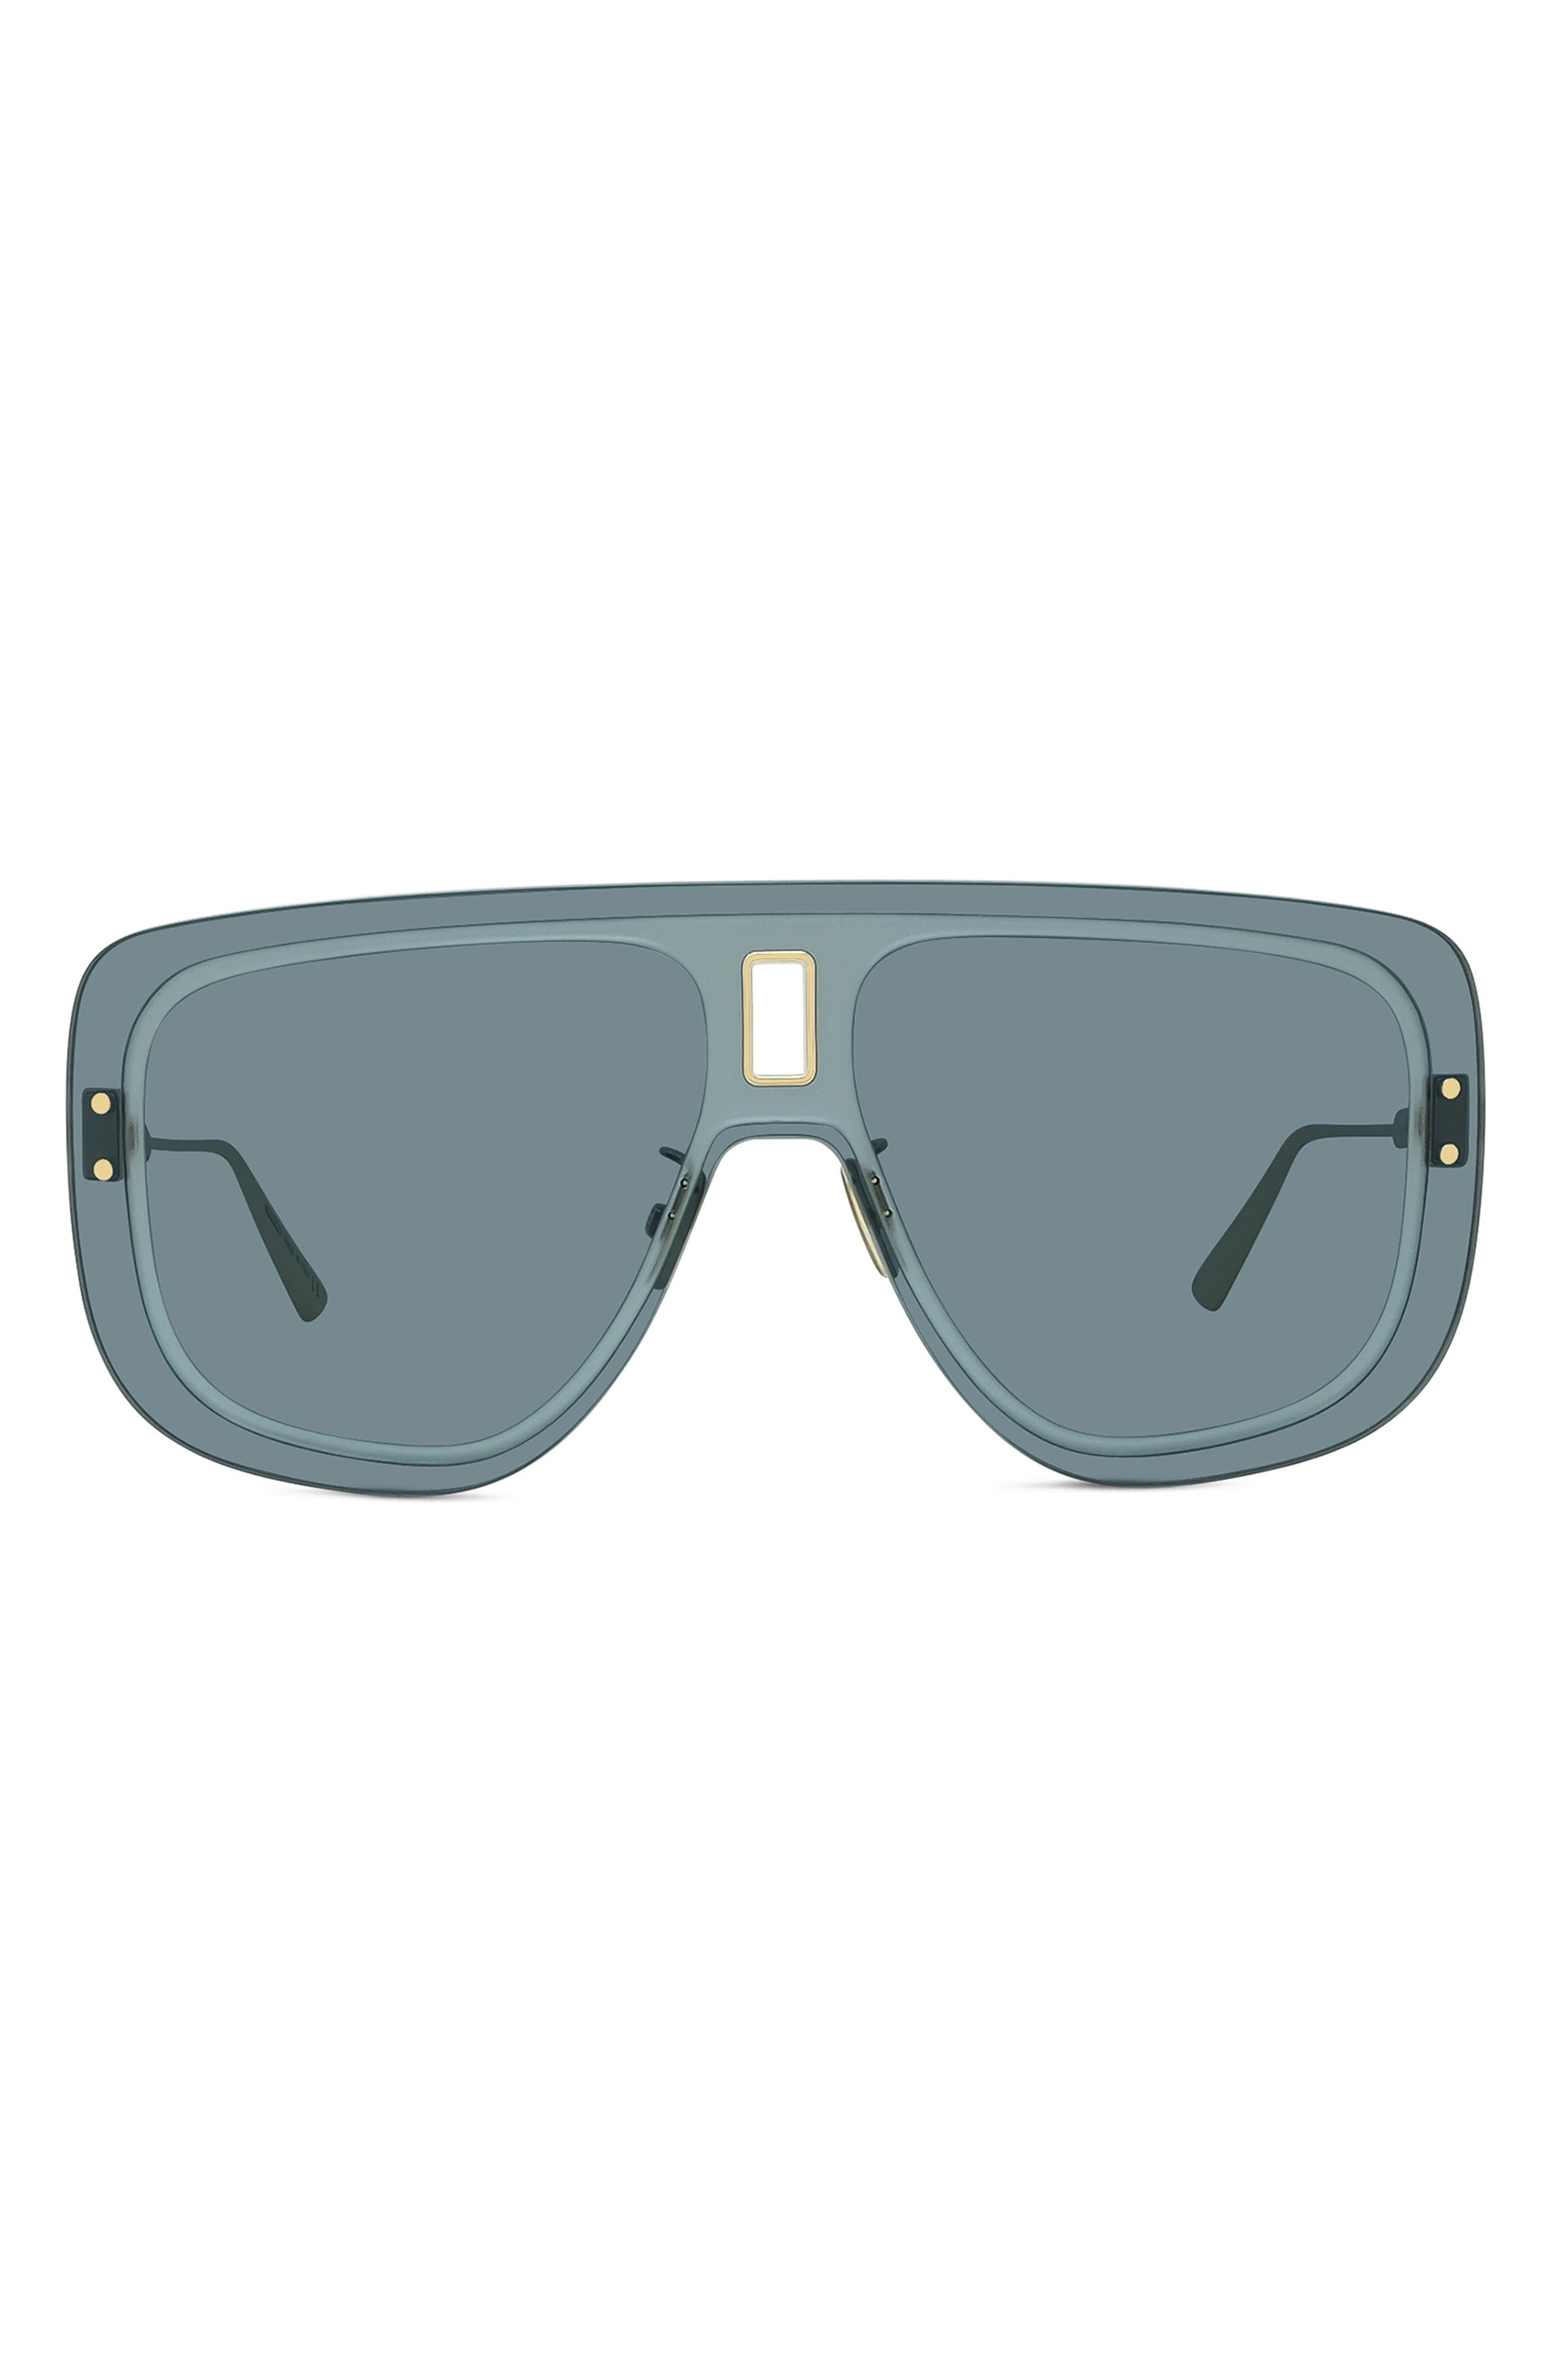 UltraDior Mask Sunglasses in Gold/Blue